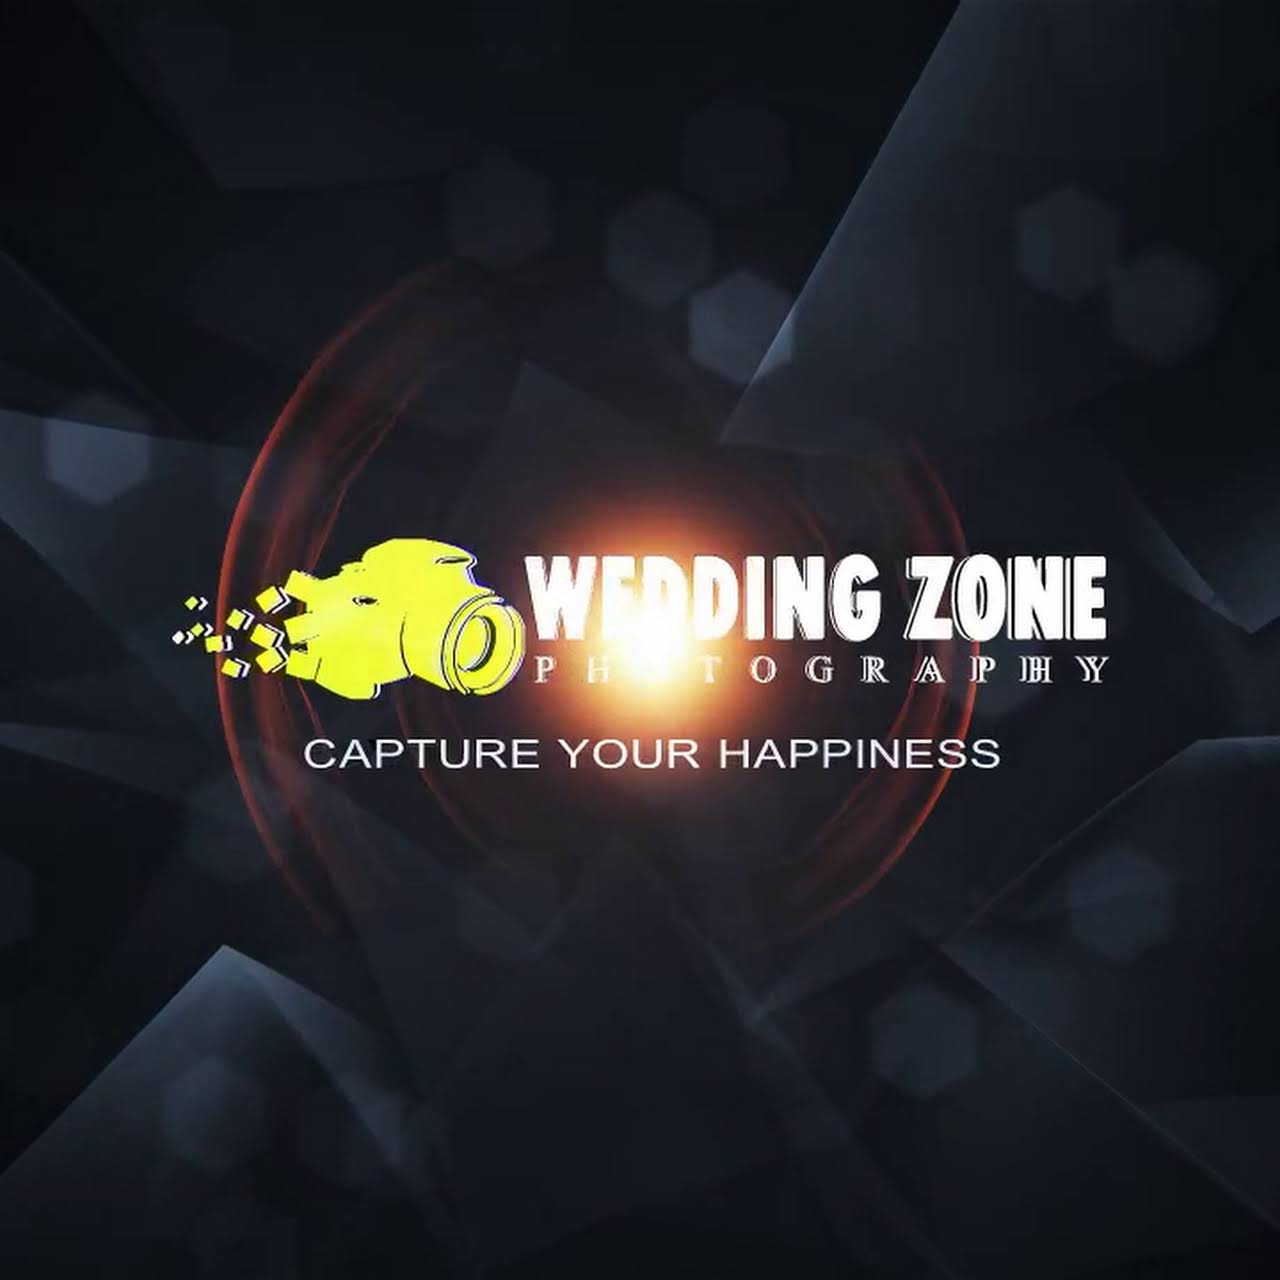 WEDDING ZONE PHOTOGRAPHY Logo